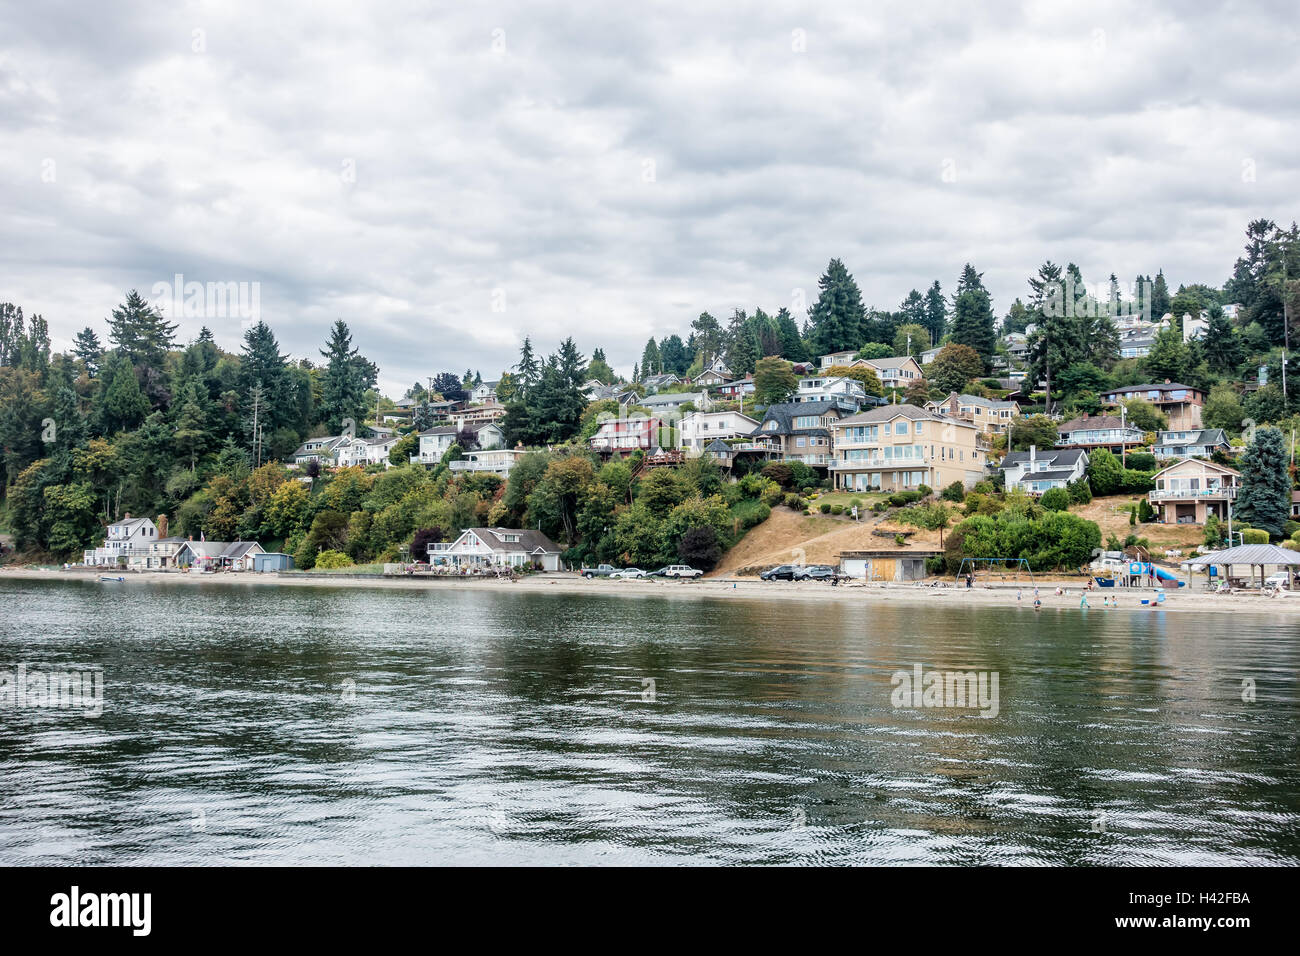 A veie of residences along the shoreline at Dash Point, Washington. Stock Photo